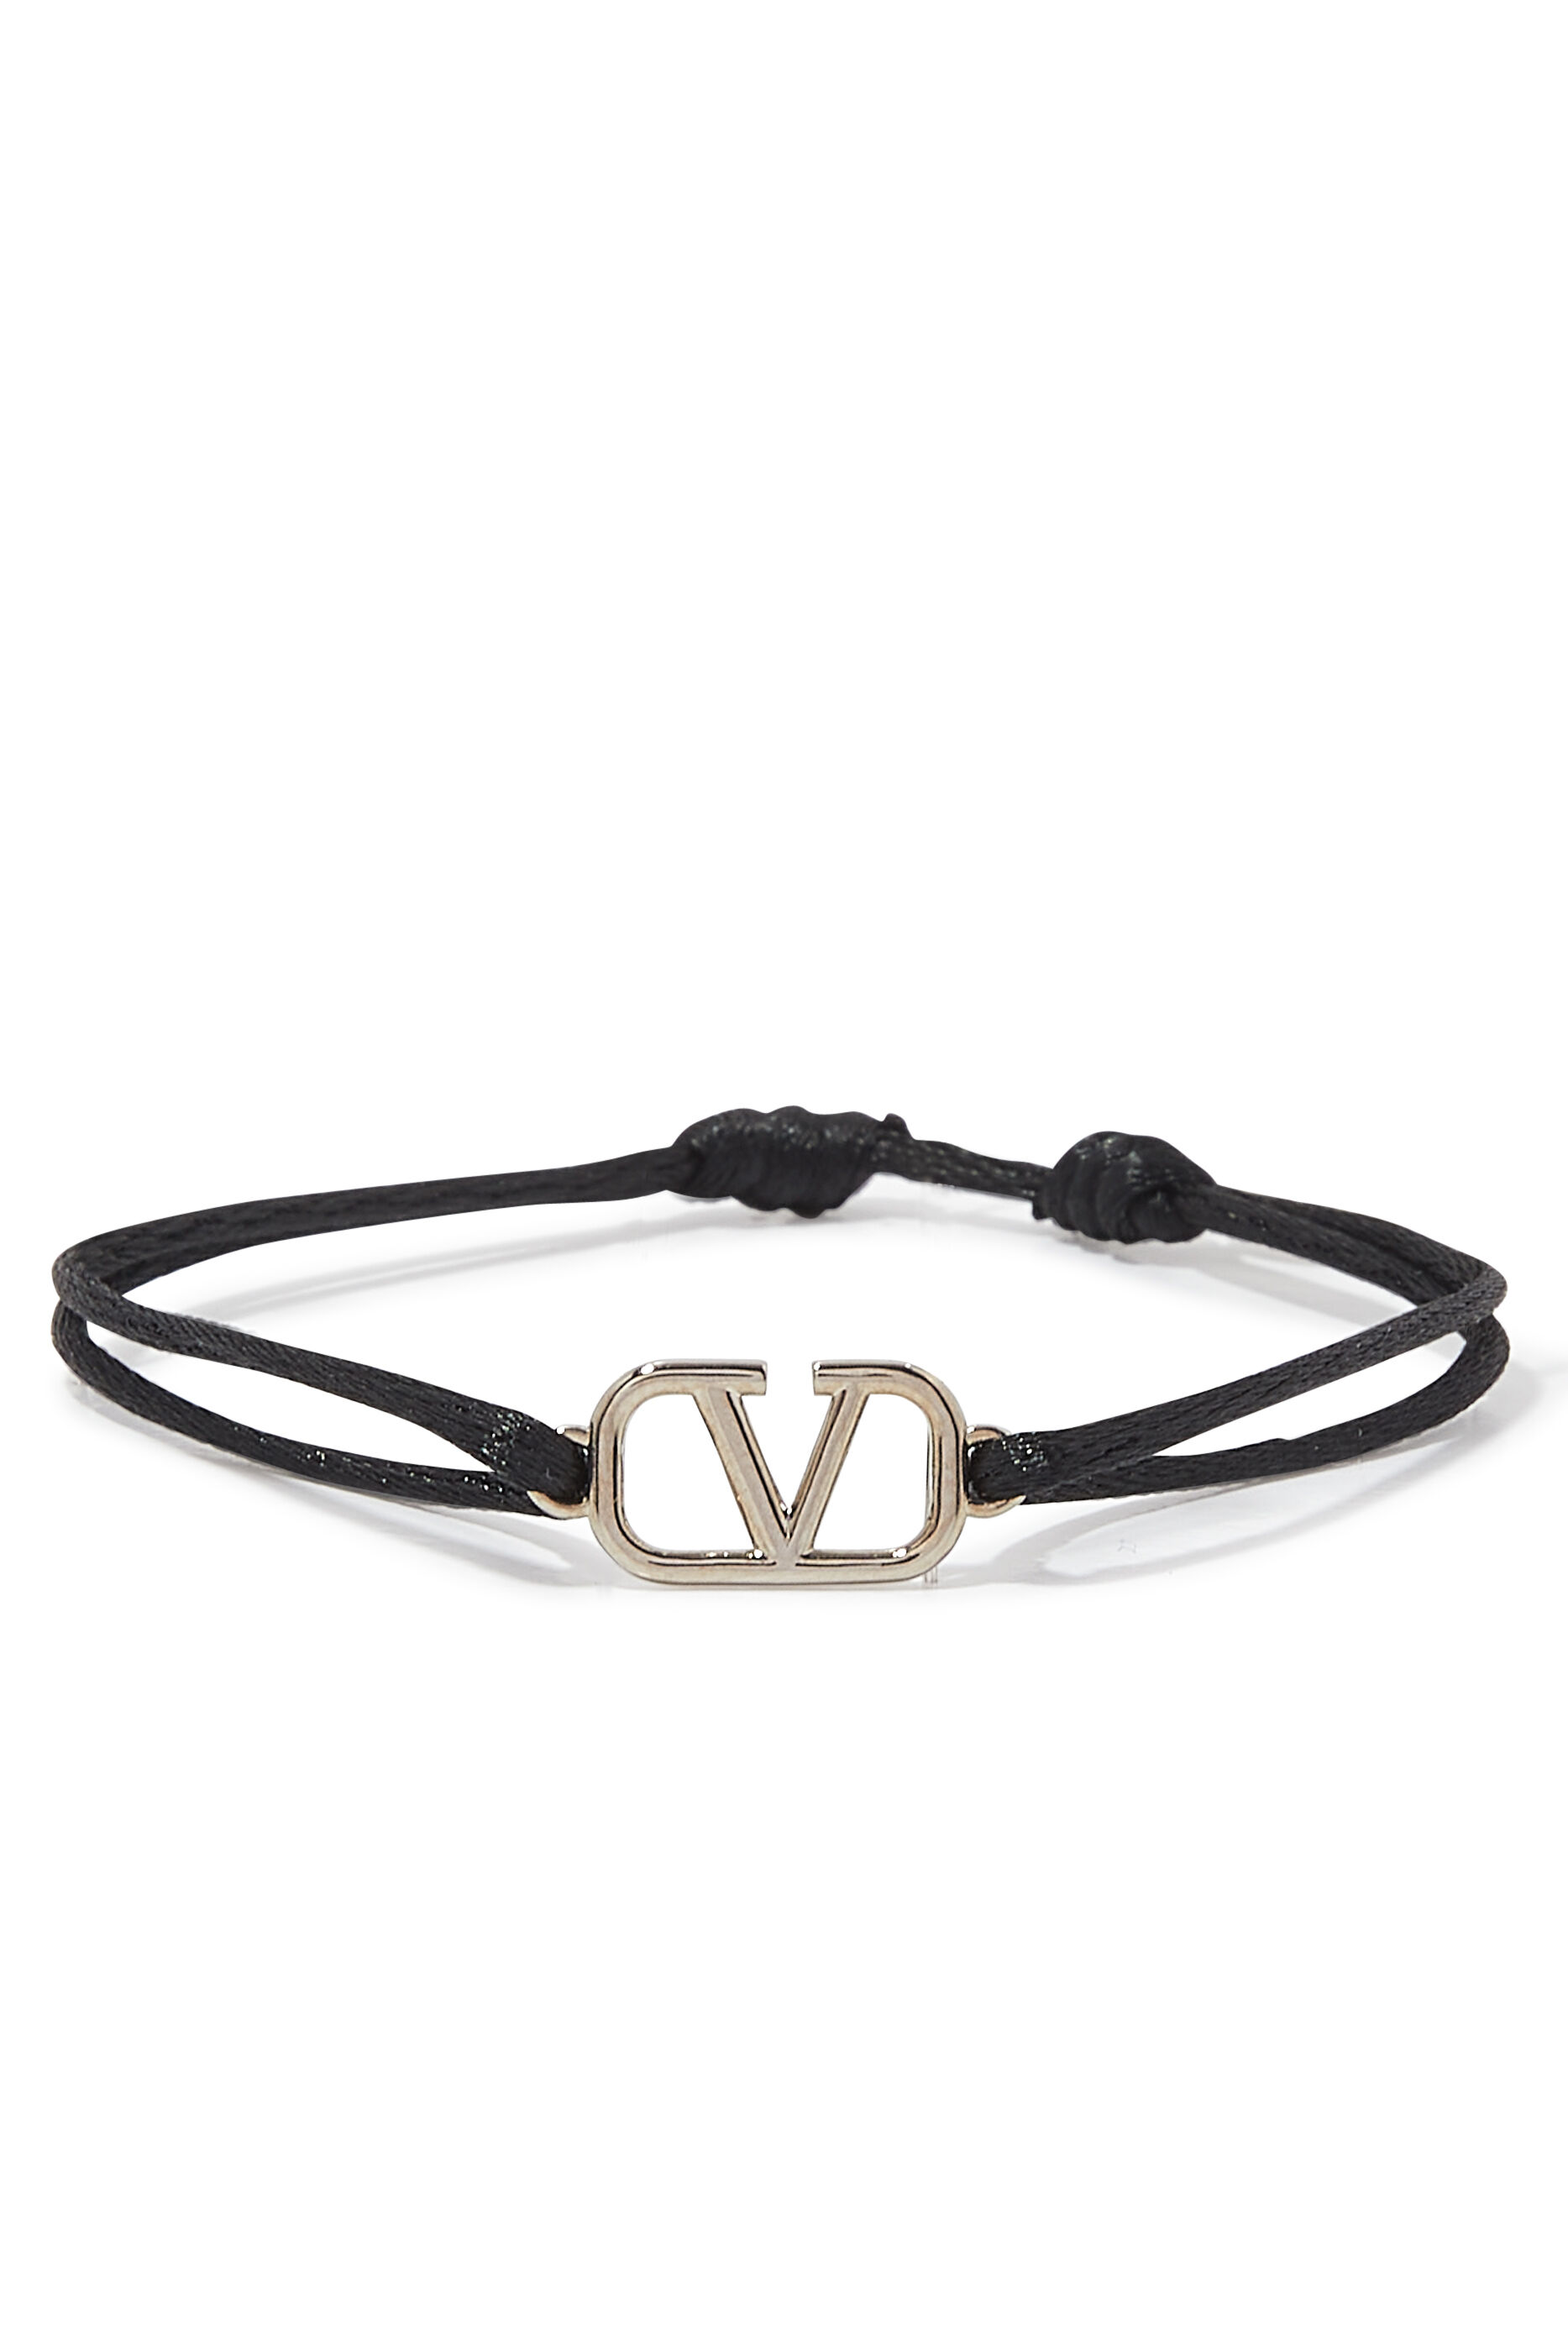 VLogo Signature cord bracelet | Valentino Garavani | Eraldo.com